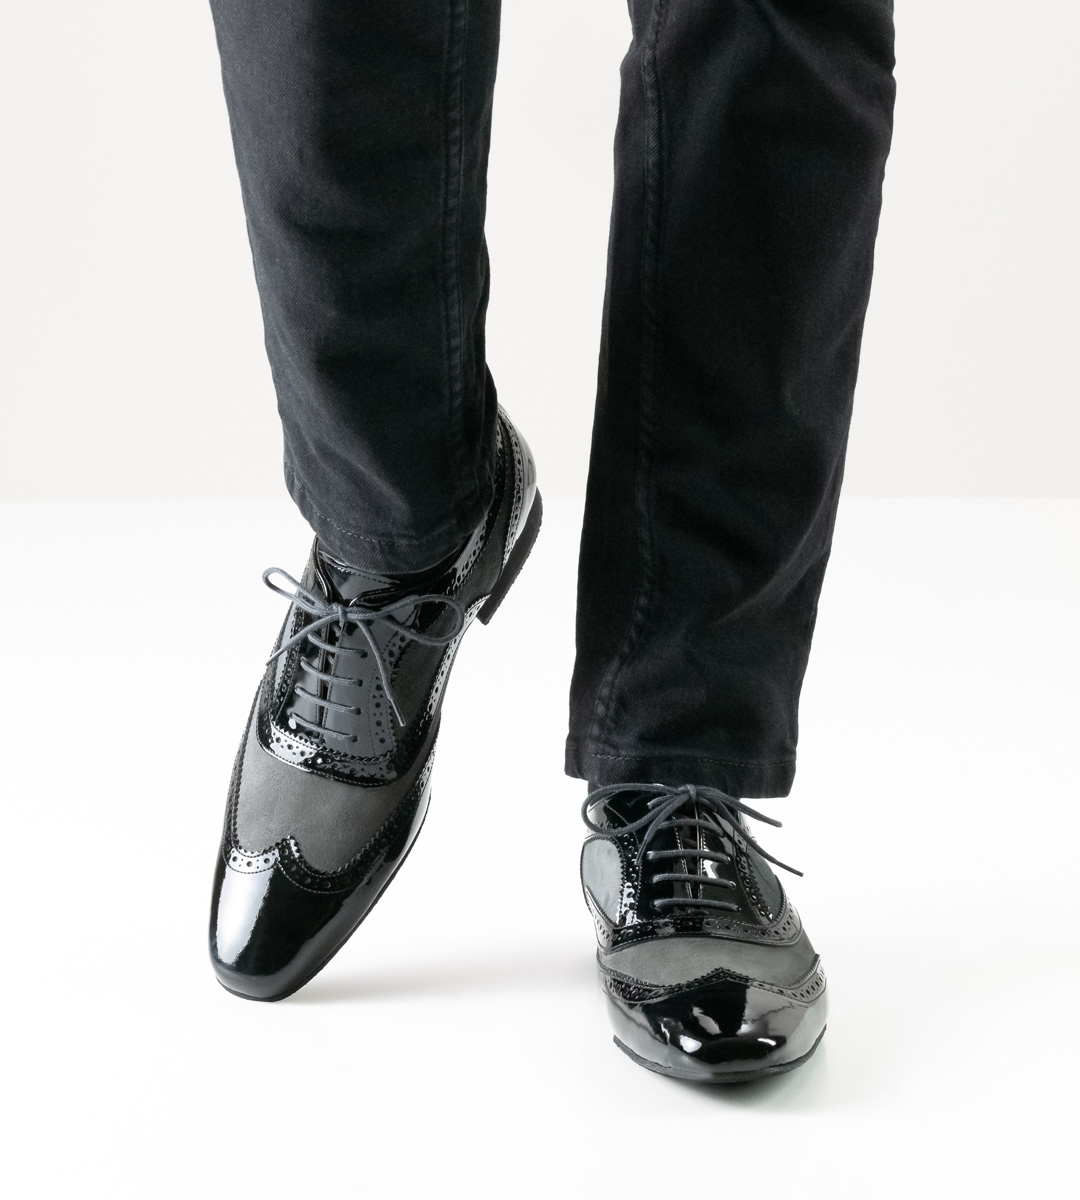 Men's dance shoe by Nueva Epoca with 2 cm micro heel in combination with black jeans